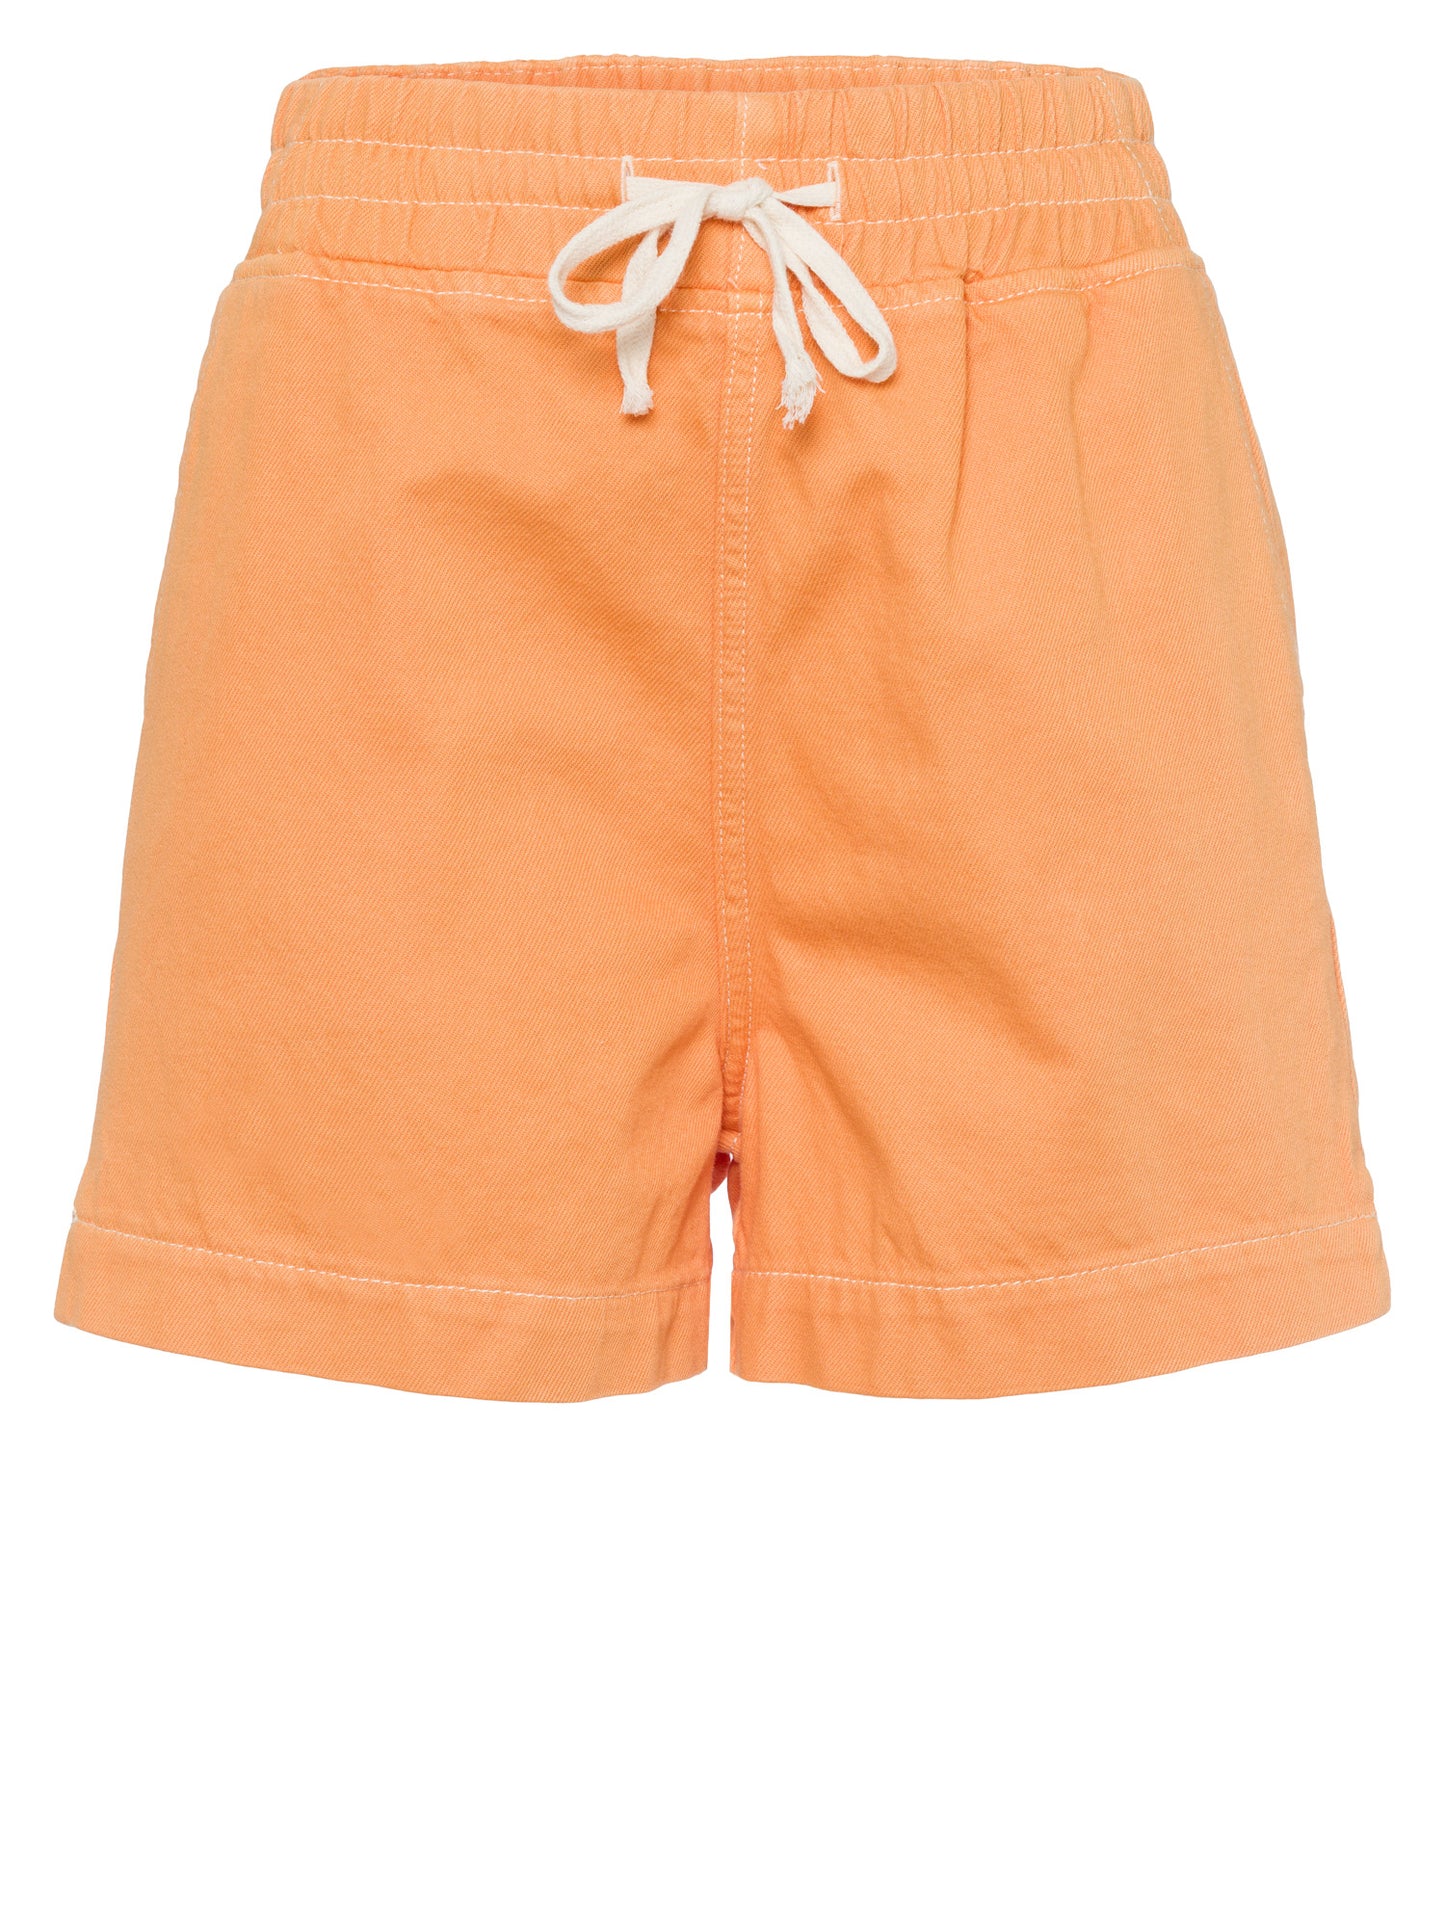 Women's jogger shorts orange